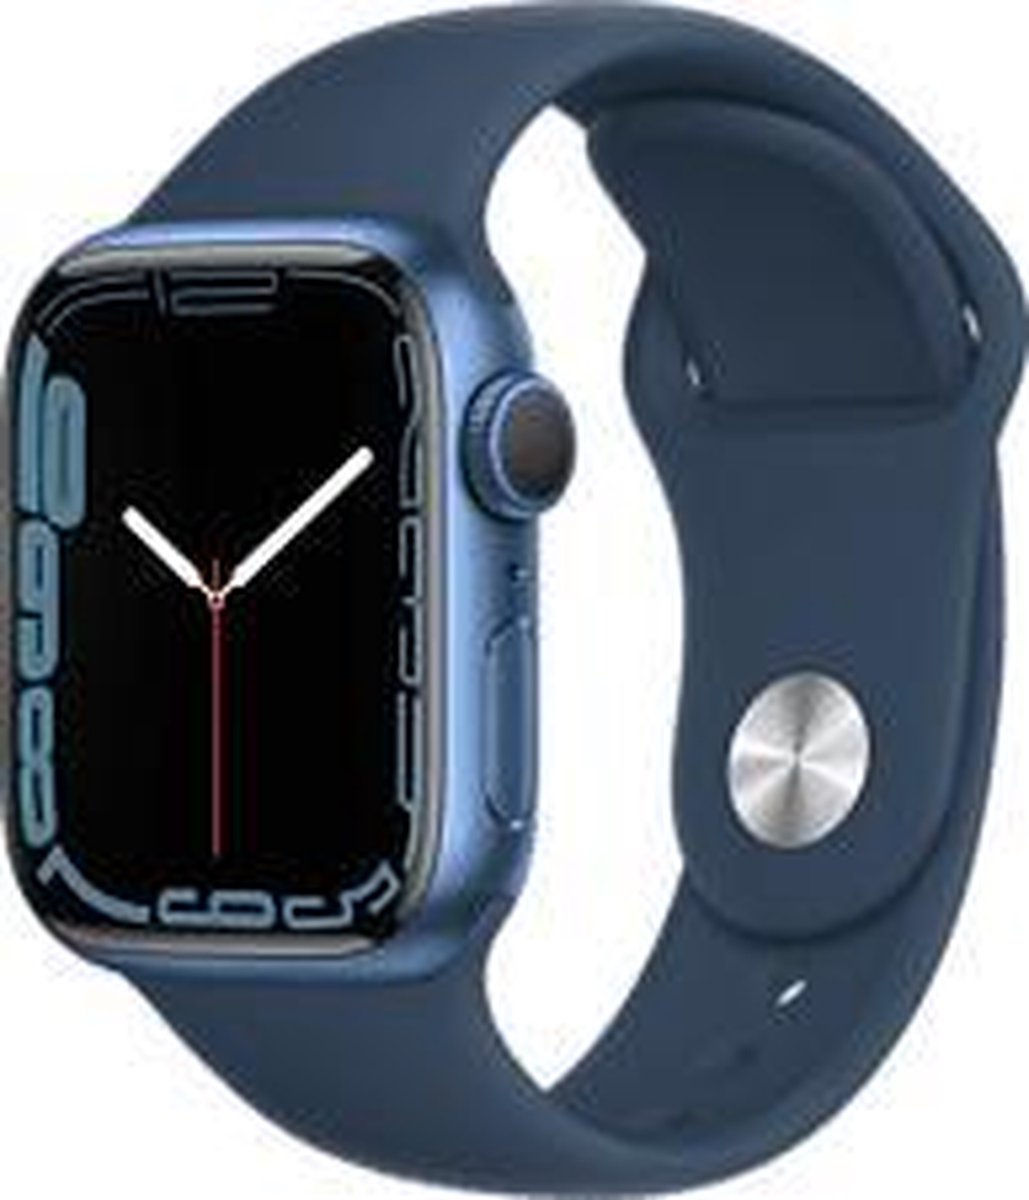 Apple Watch Series 7 41mm Aluminiume Sportband - Blauw